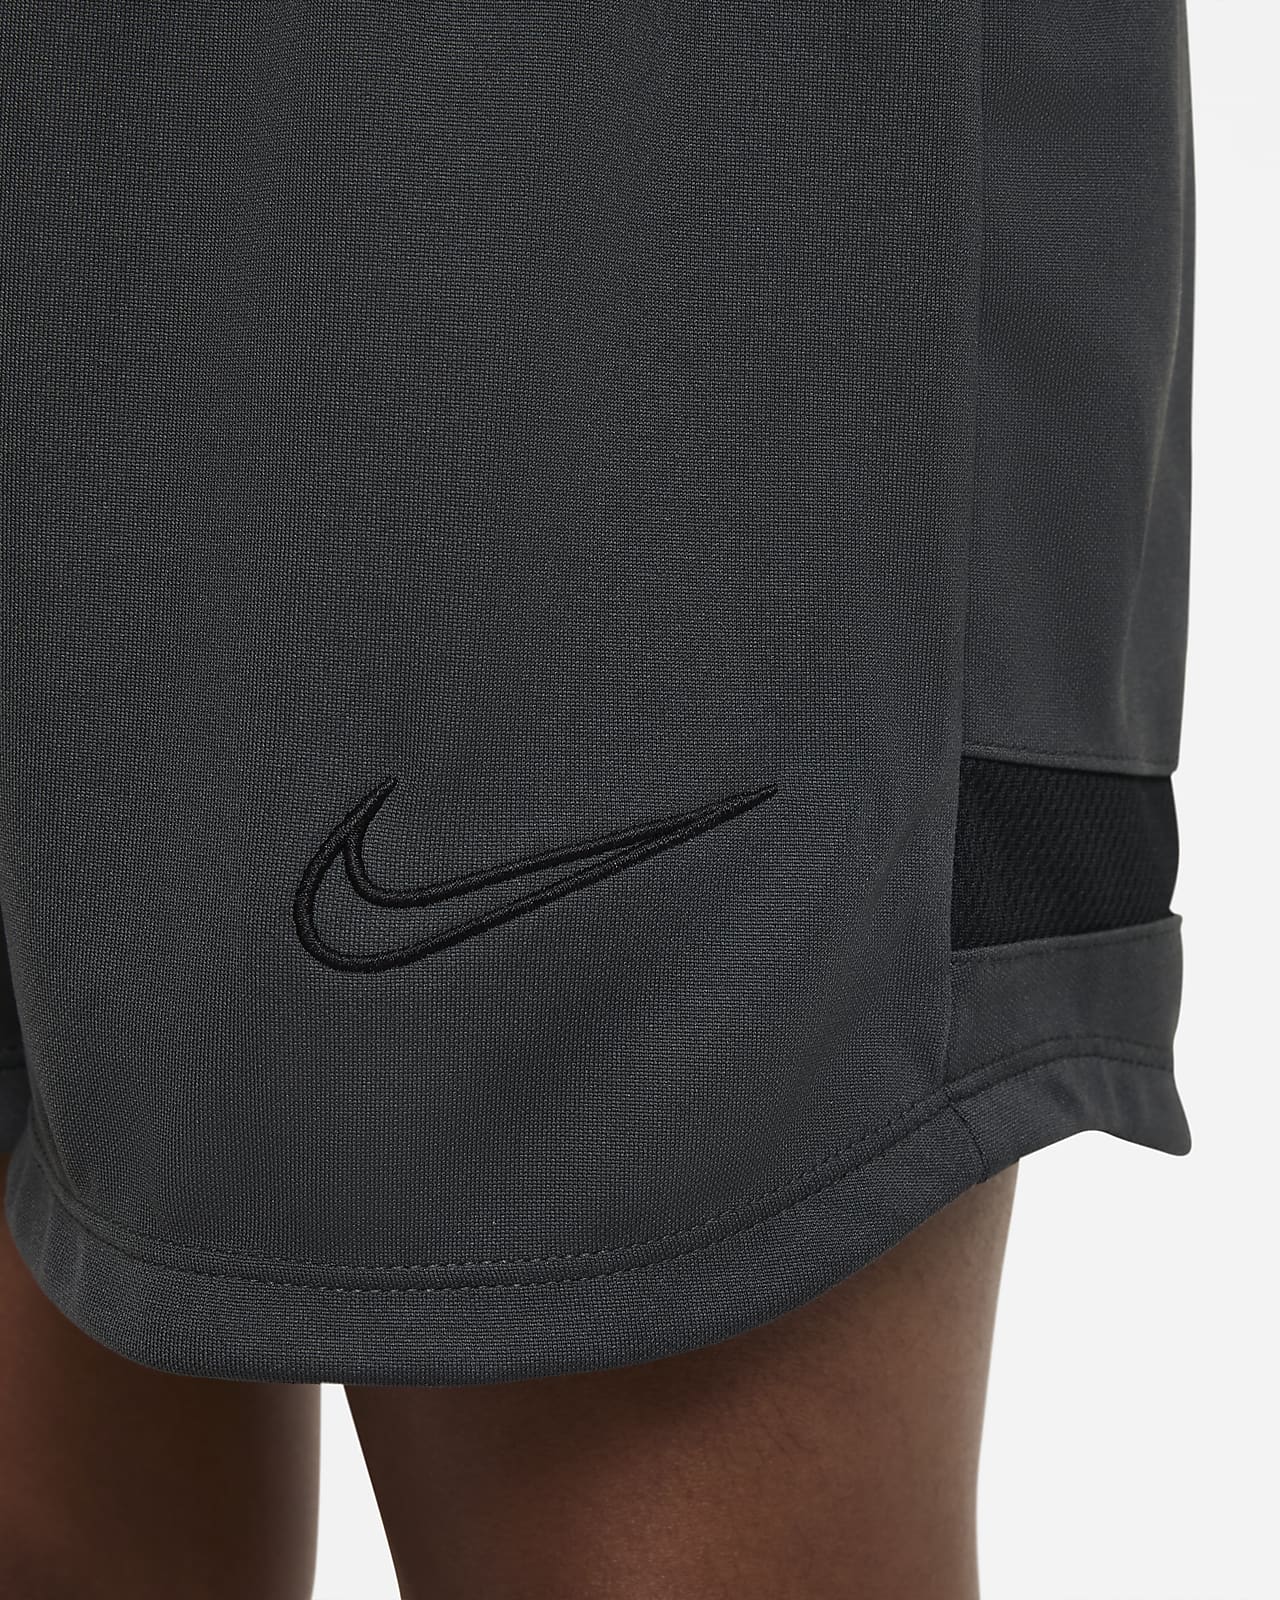 Big Nike Academy Soccer Knit Kids\' Shorts. Dri-FIT